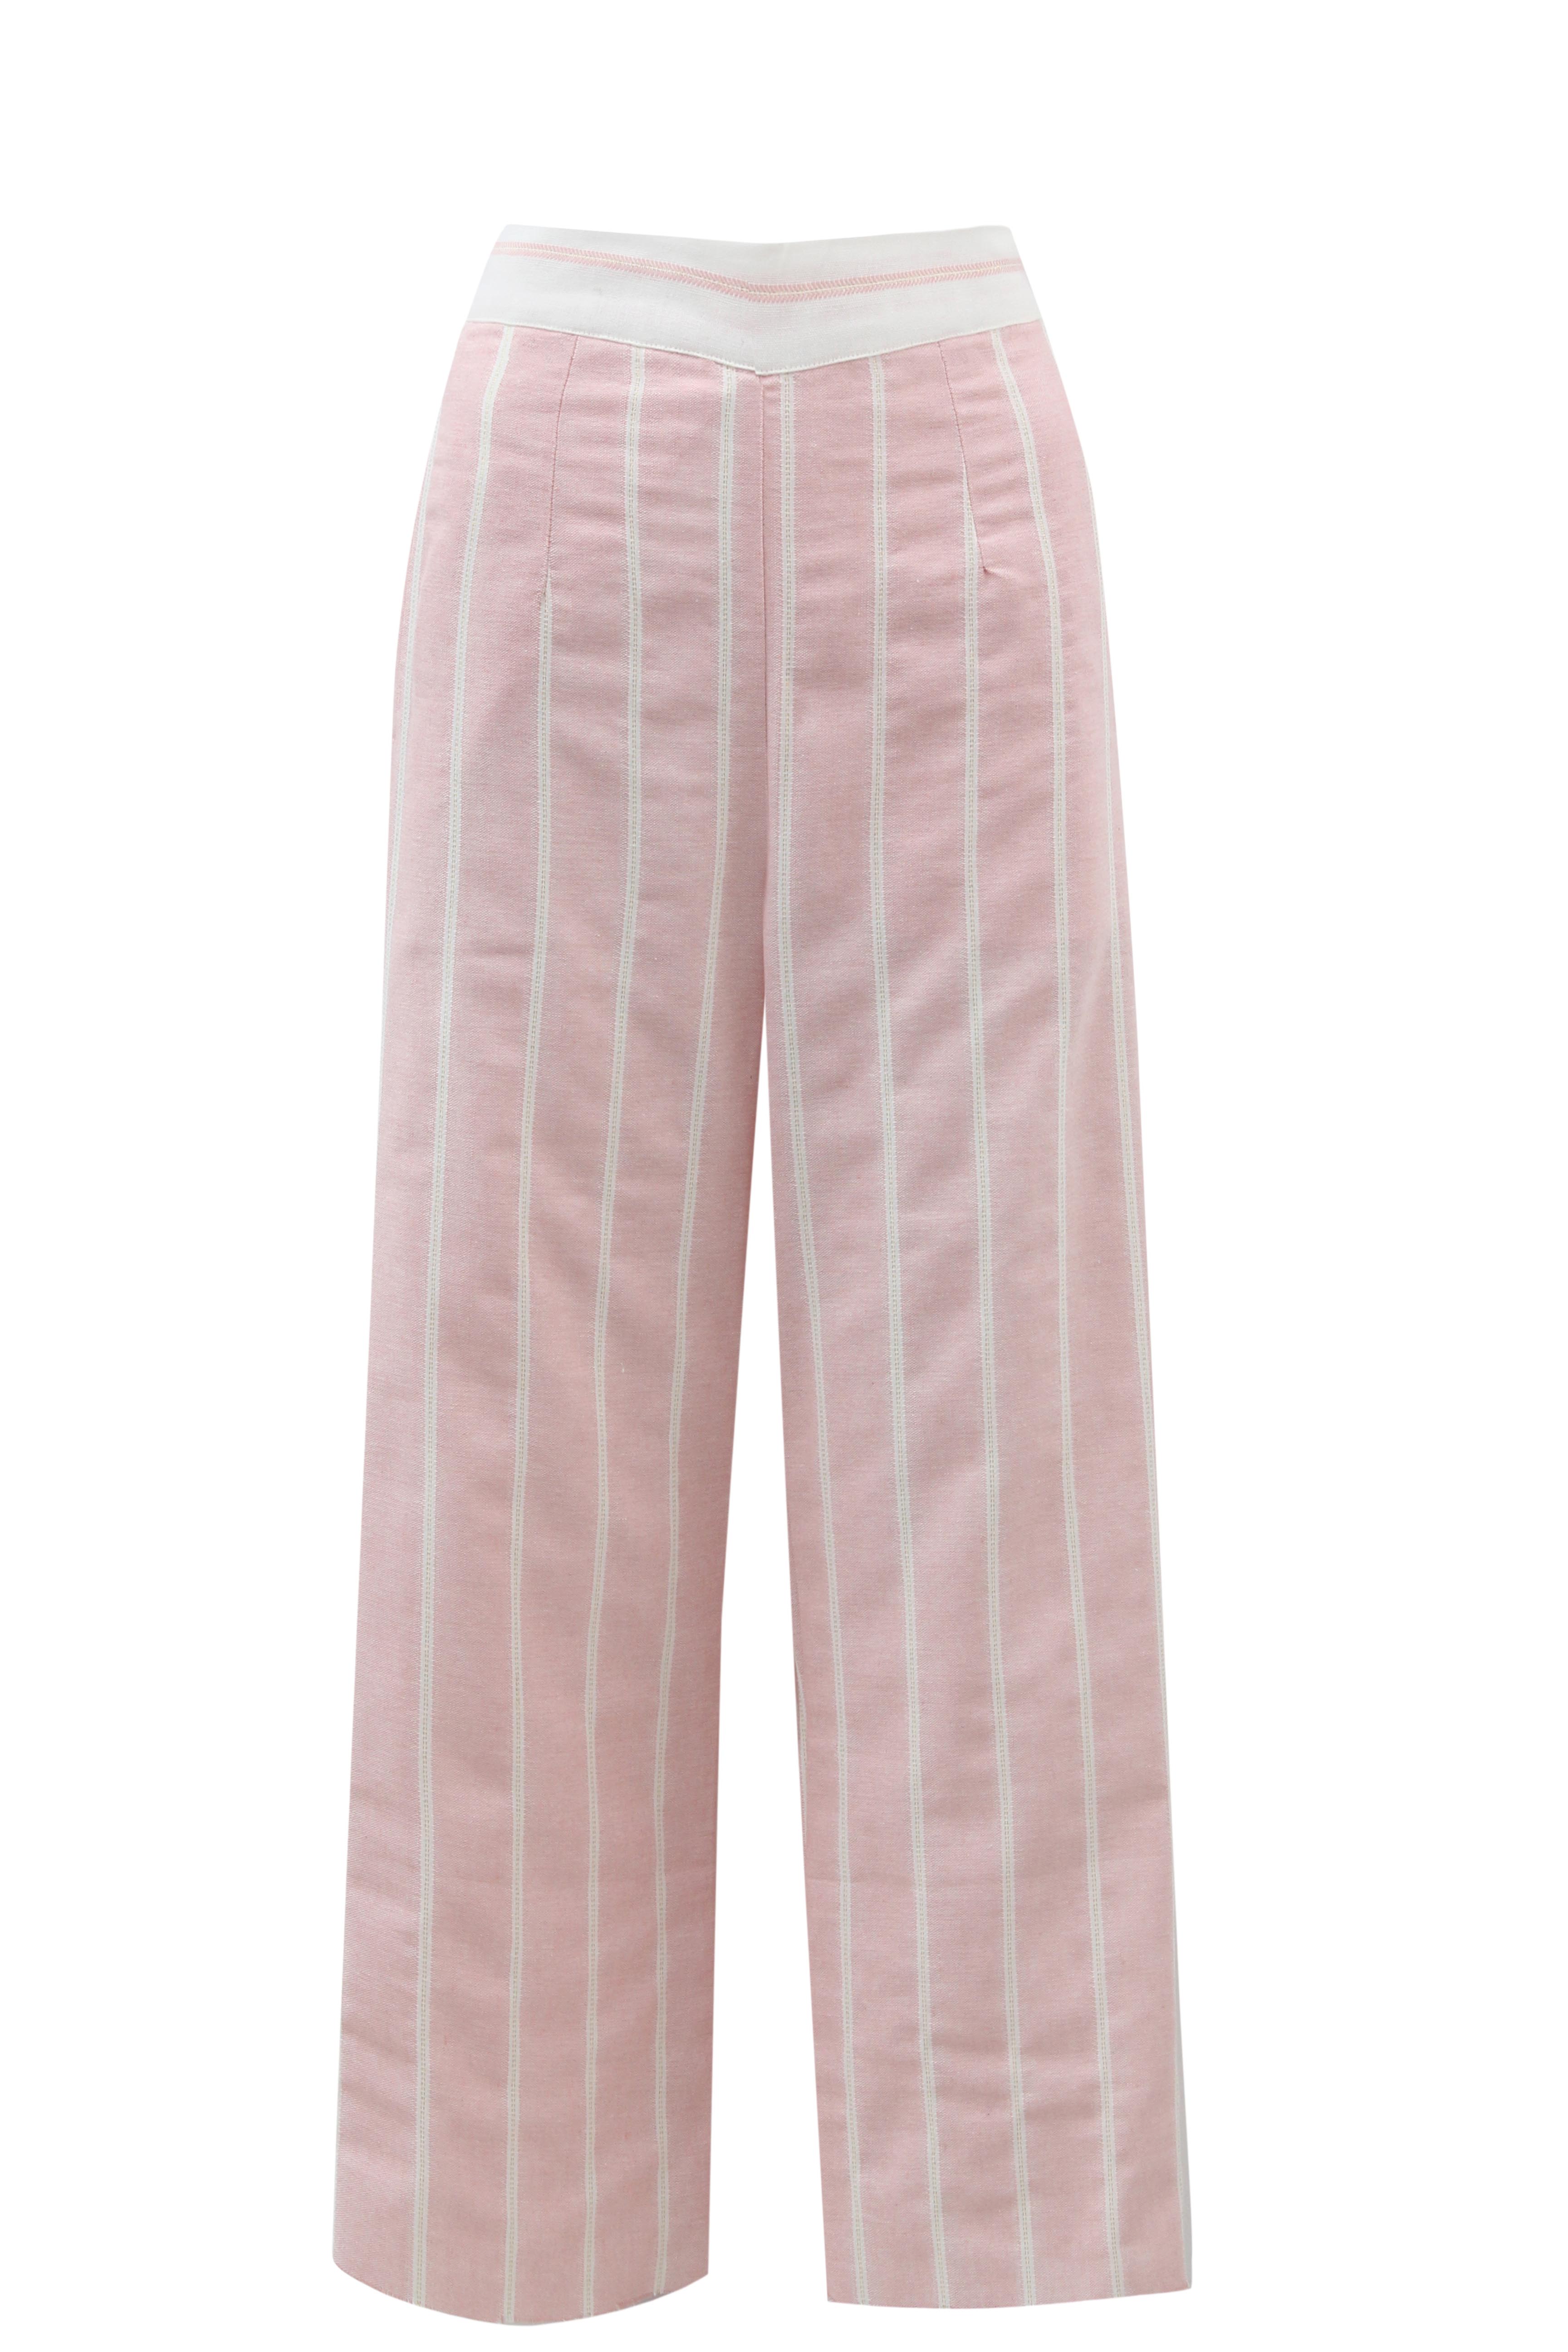 Osage Pants- Pink Stripes